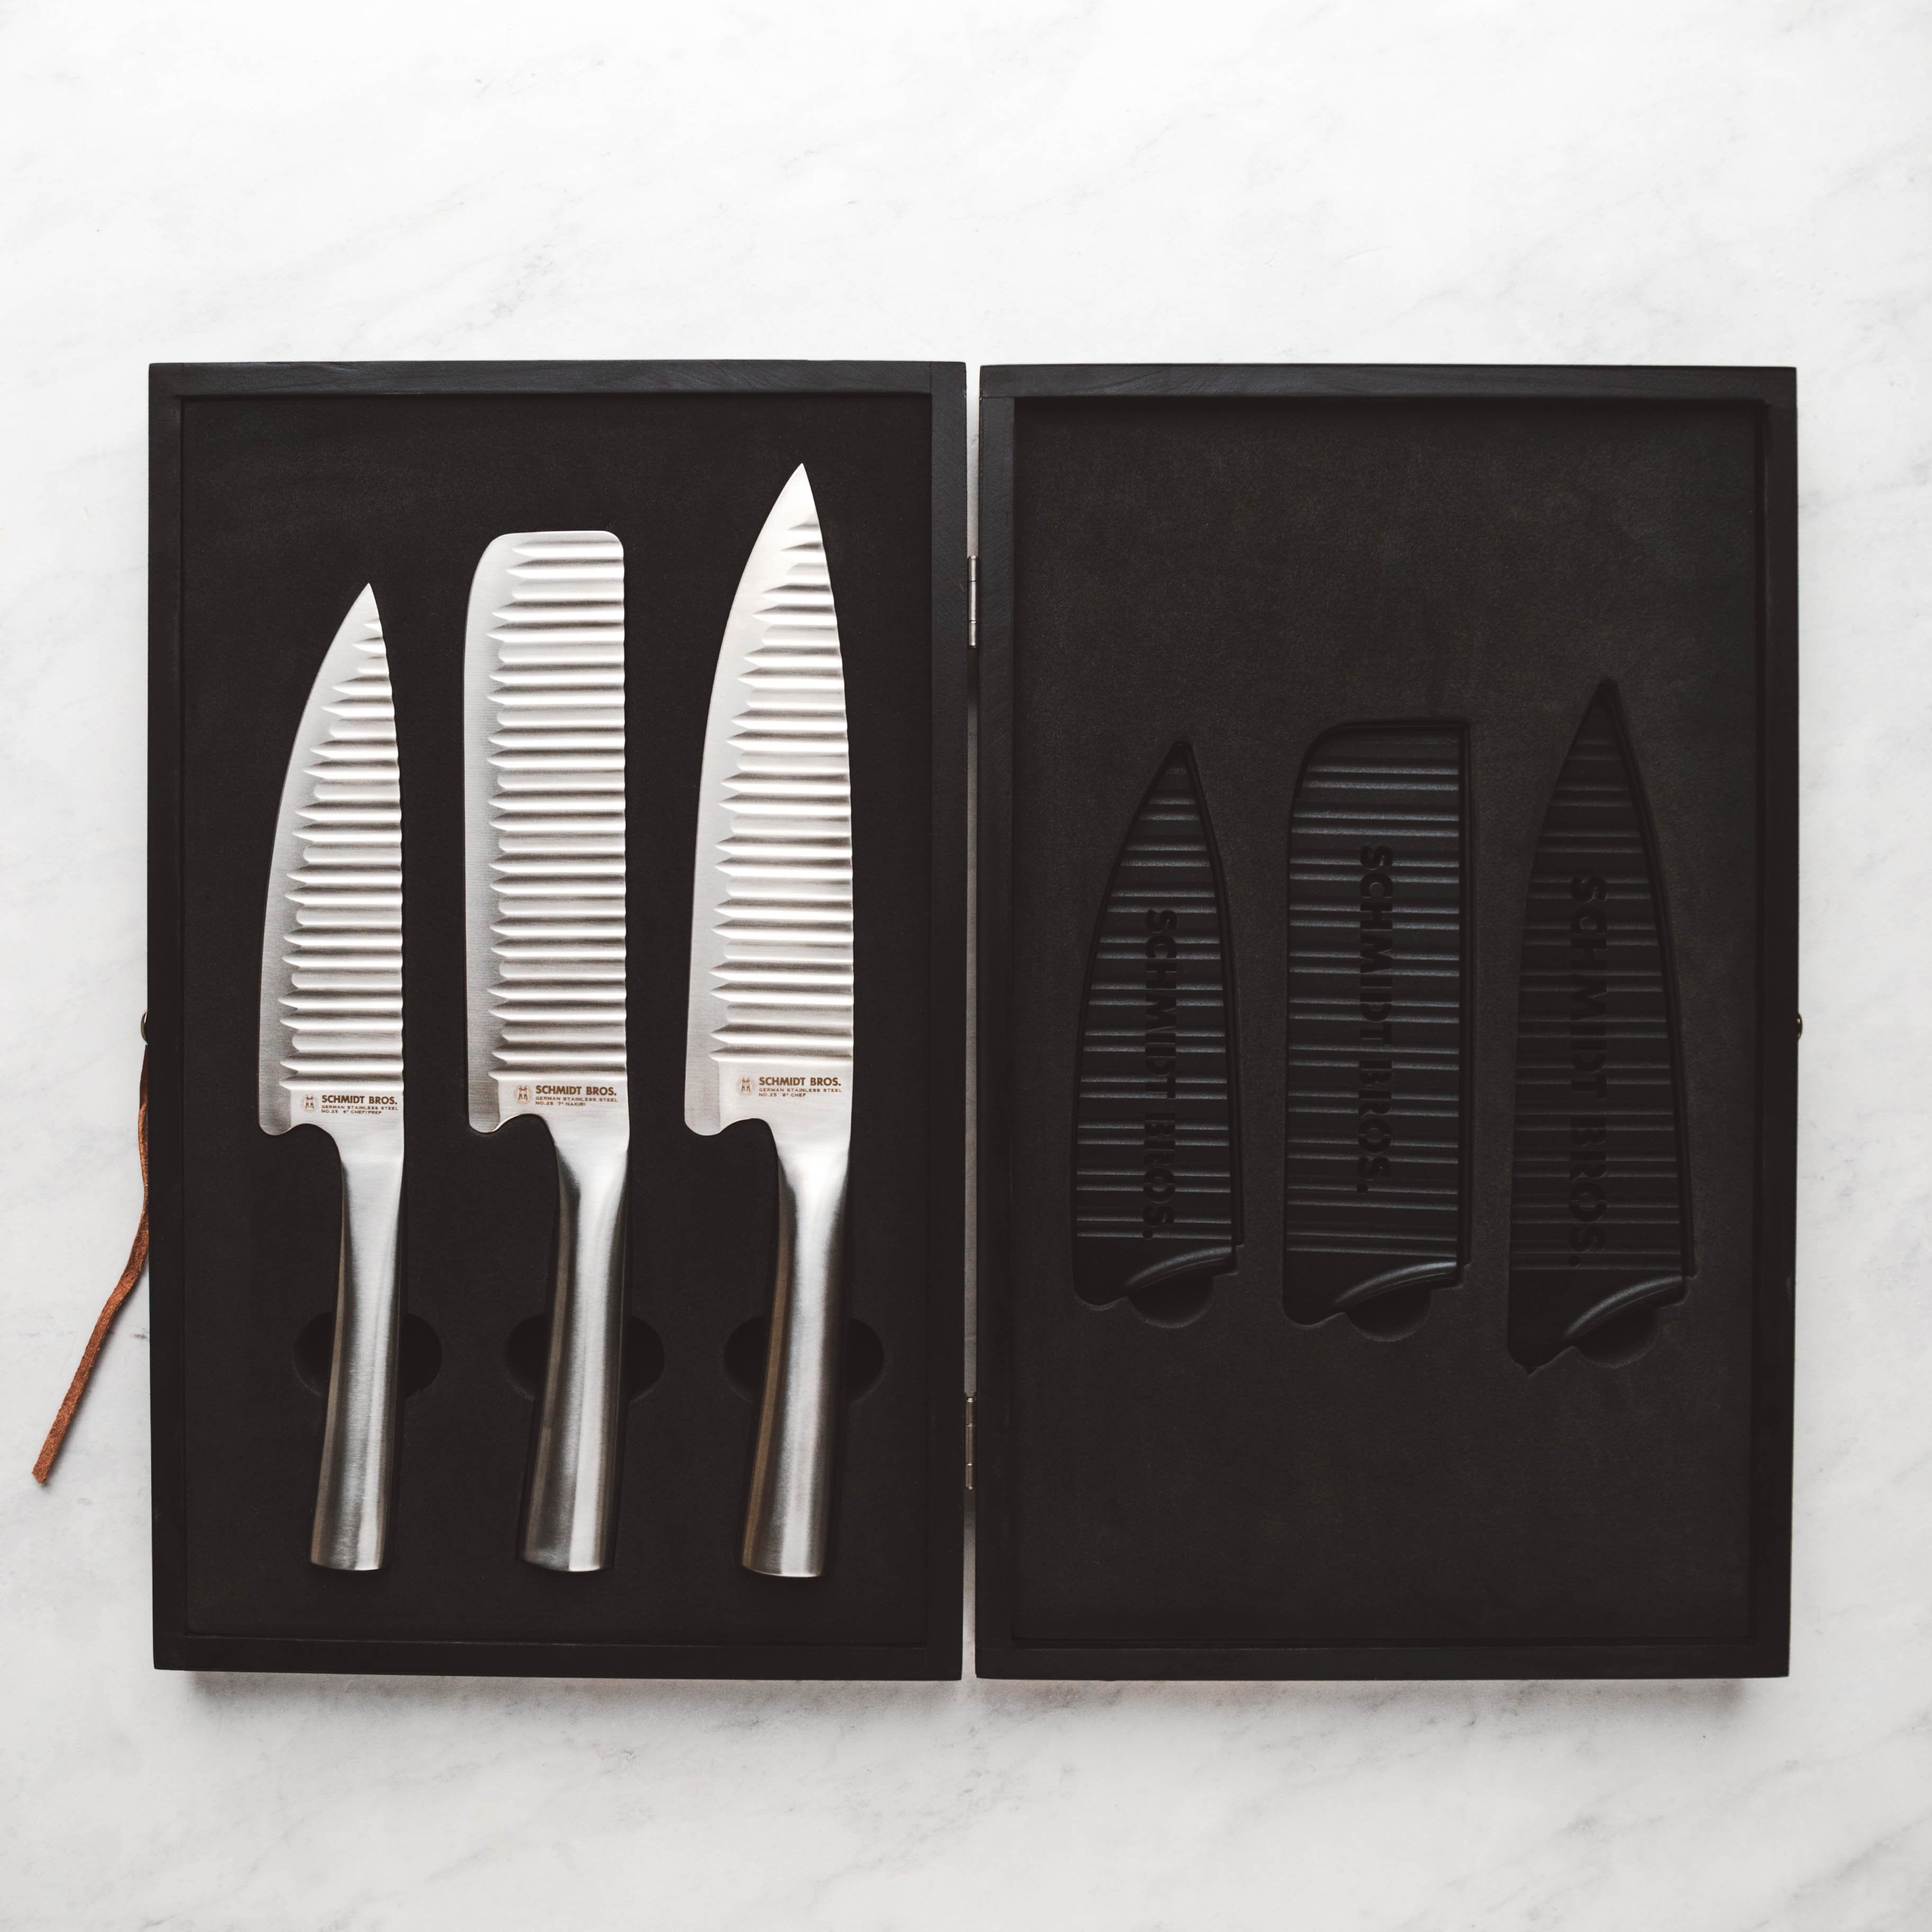 Schmidt Bros 3 Pc Forged Professional Chef Knife Set German Steel